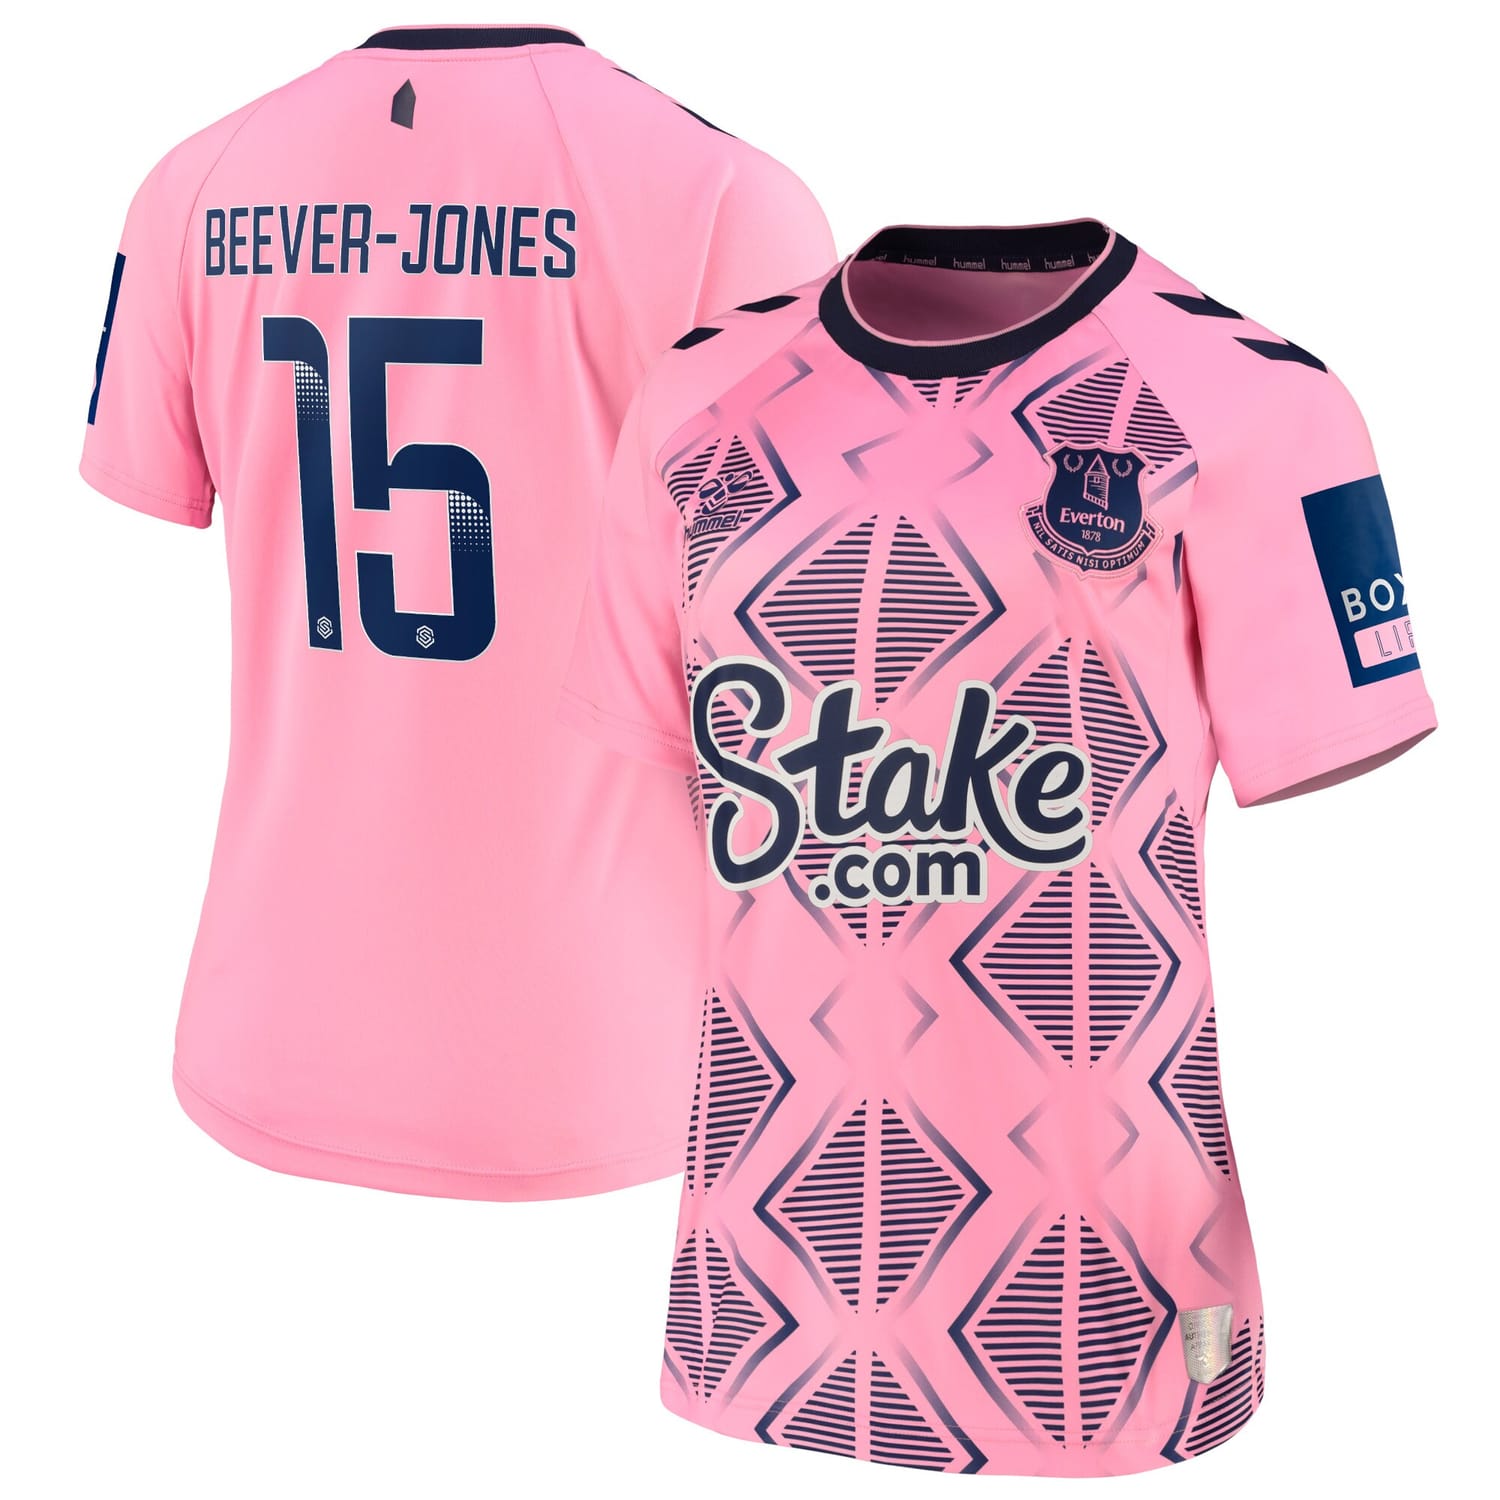 Premier League Everton Away WSL Jersey Shirt 2022-23 player Aggie Beever-Jones 15 printing for Women